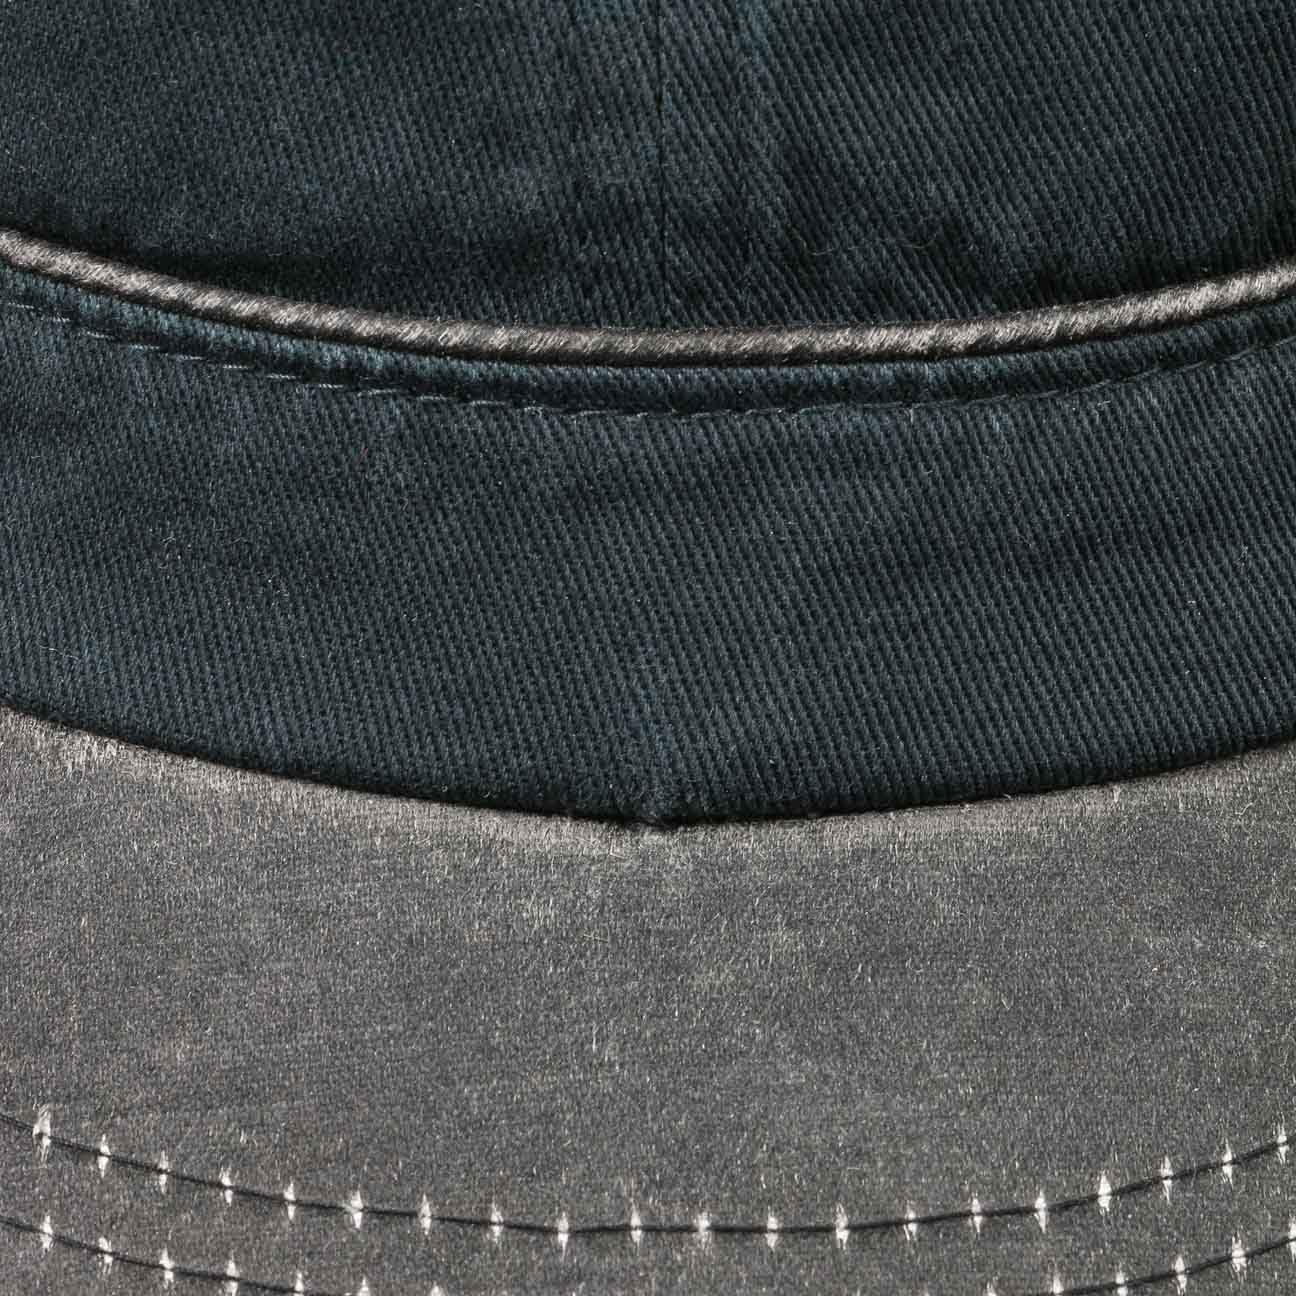 Stetson Army Cap (1-St) Sommercap Metallschnalle dunkelblau